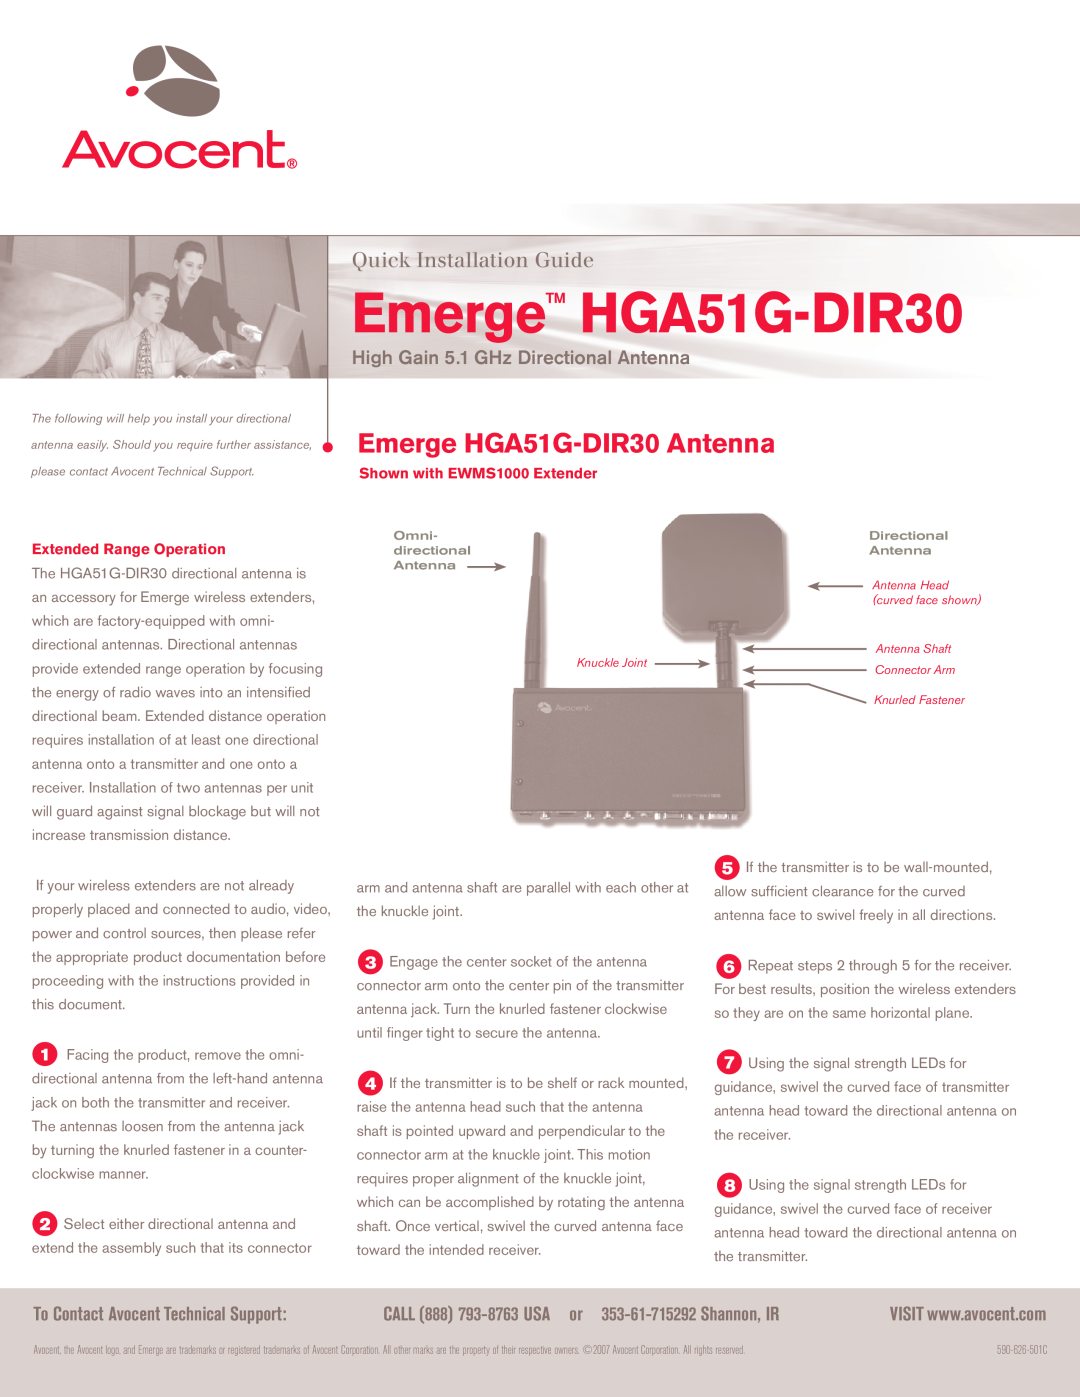 Avocent manual Emerge HGA51G-DIR30Antenna, Quick Installation Guide, High Gain 5.1 GHz Directional Antenna 